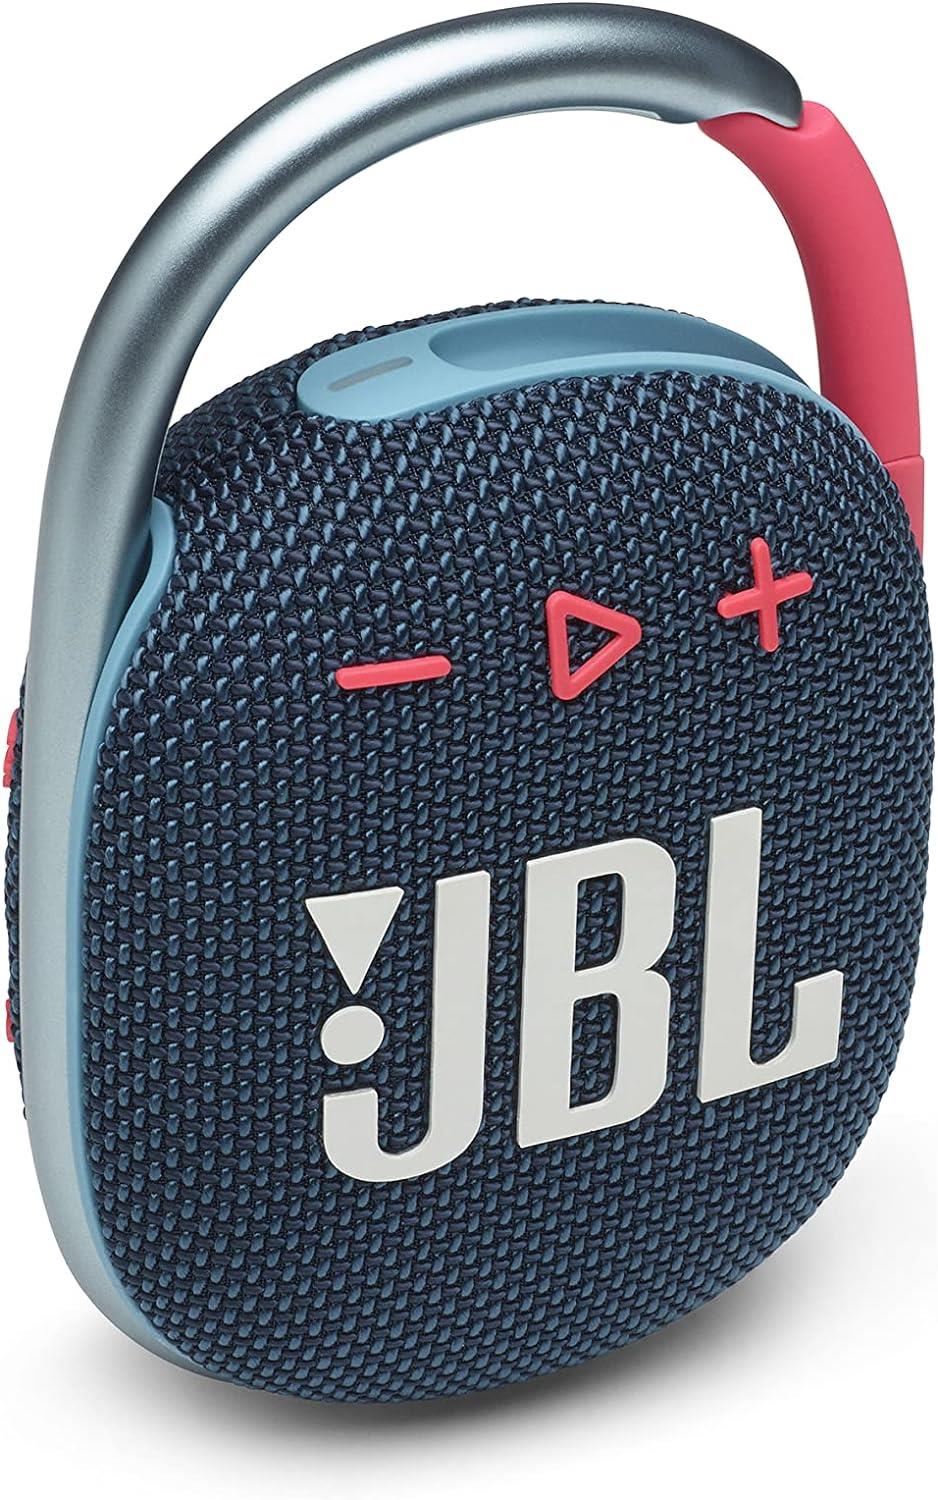 JBL Clip 4 Ip67 Su Geçirmez Bluetooth Hoparlör Mavi - Pembe - Nethouse